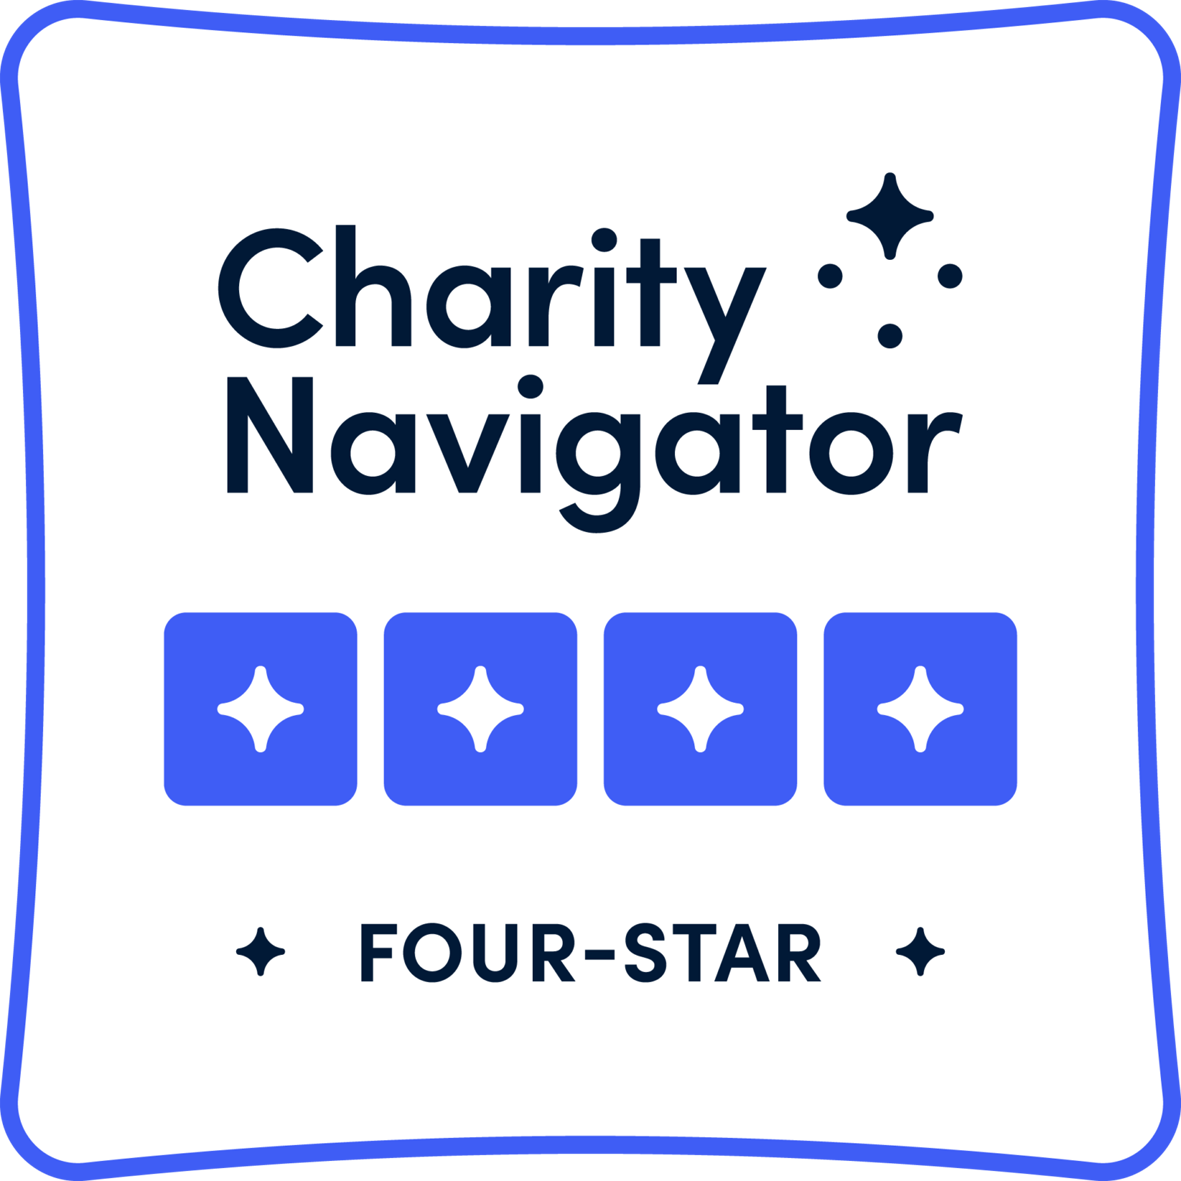 Four Star Rating Charity Navigator Turtle Island